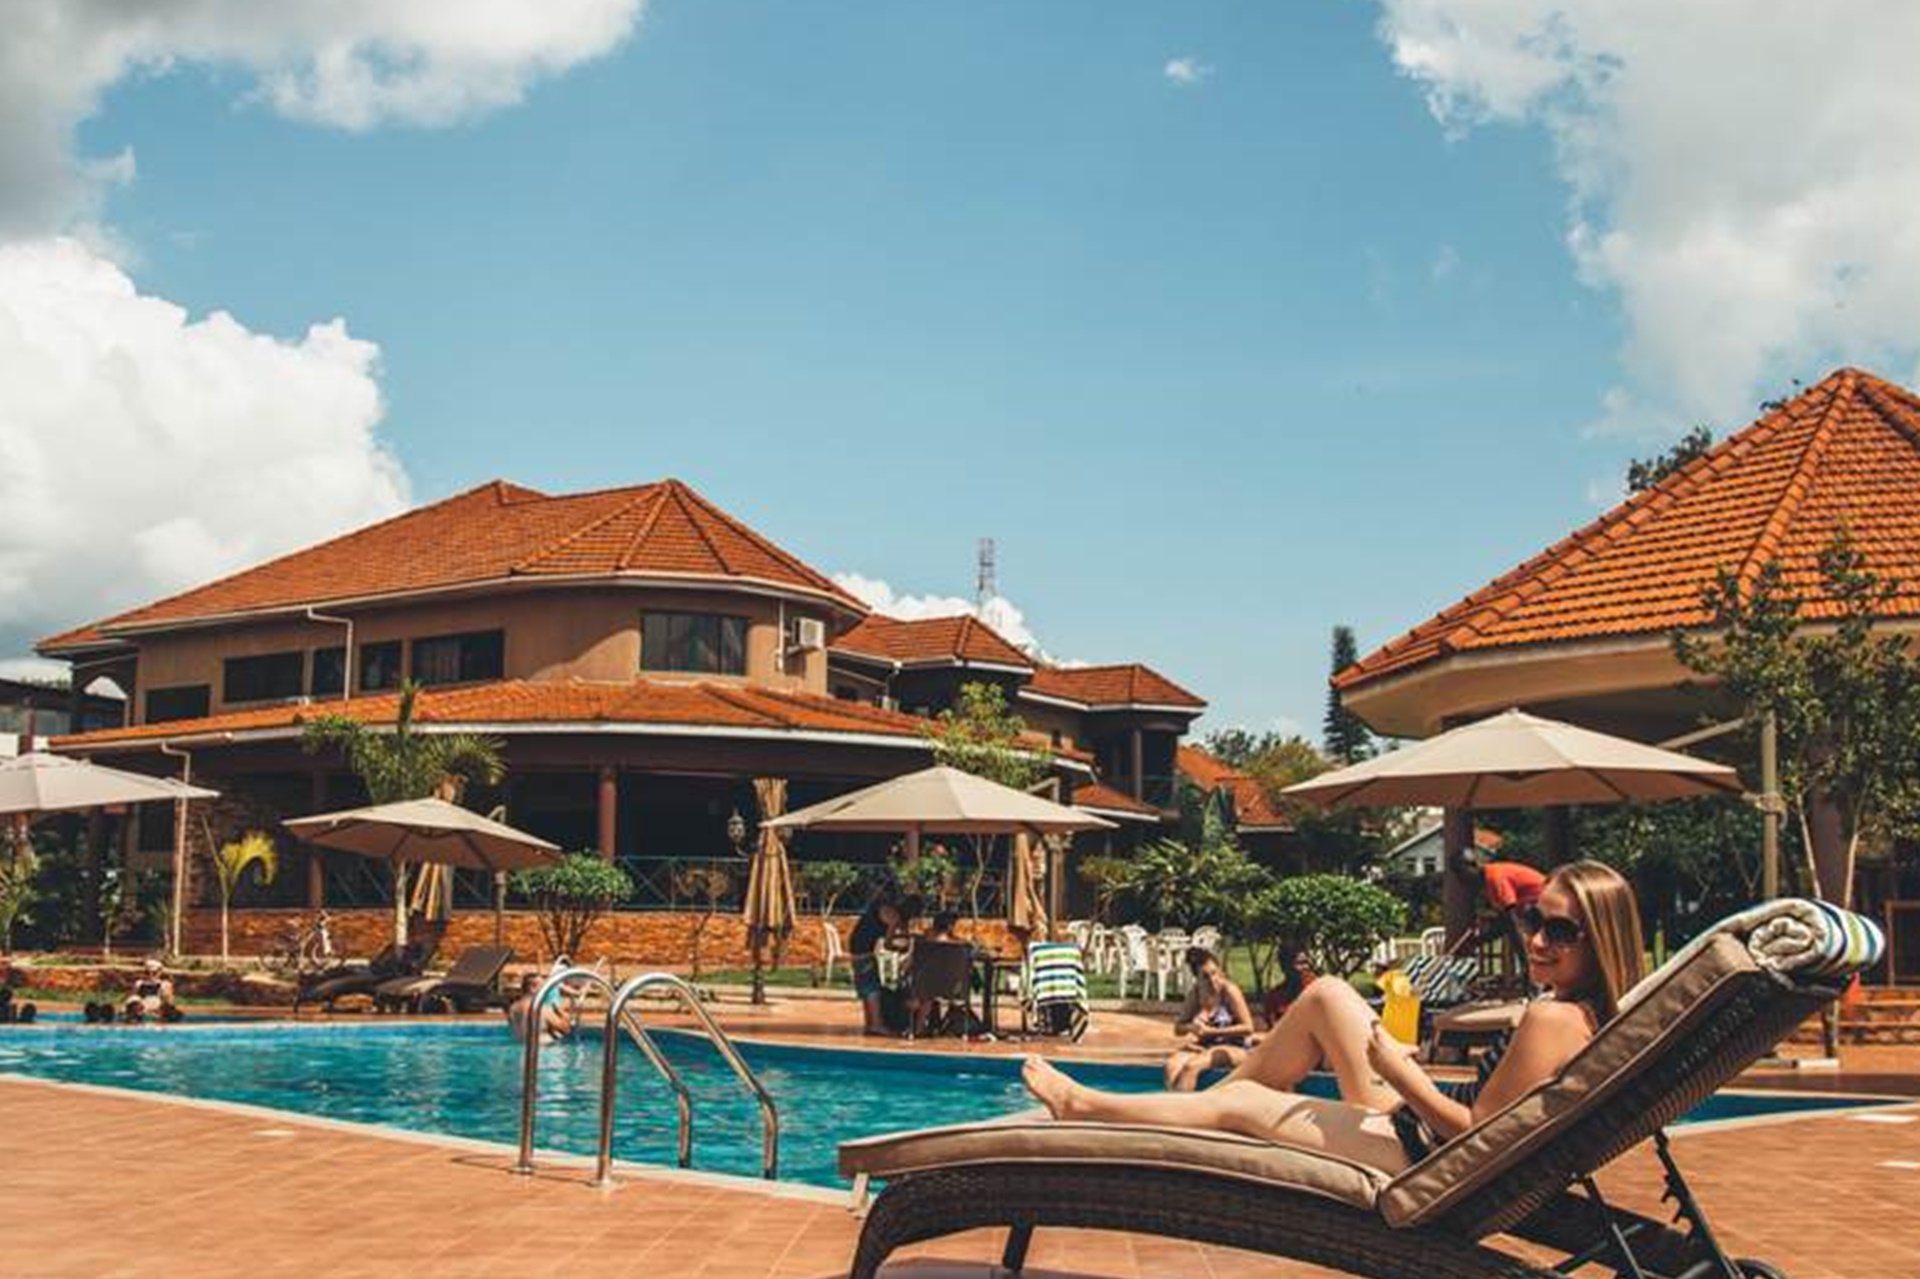 Jinja Hotels - Nile Village Hotel and Spa